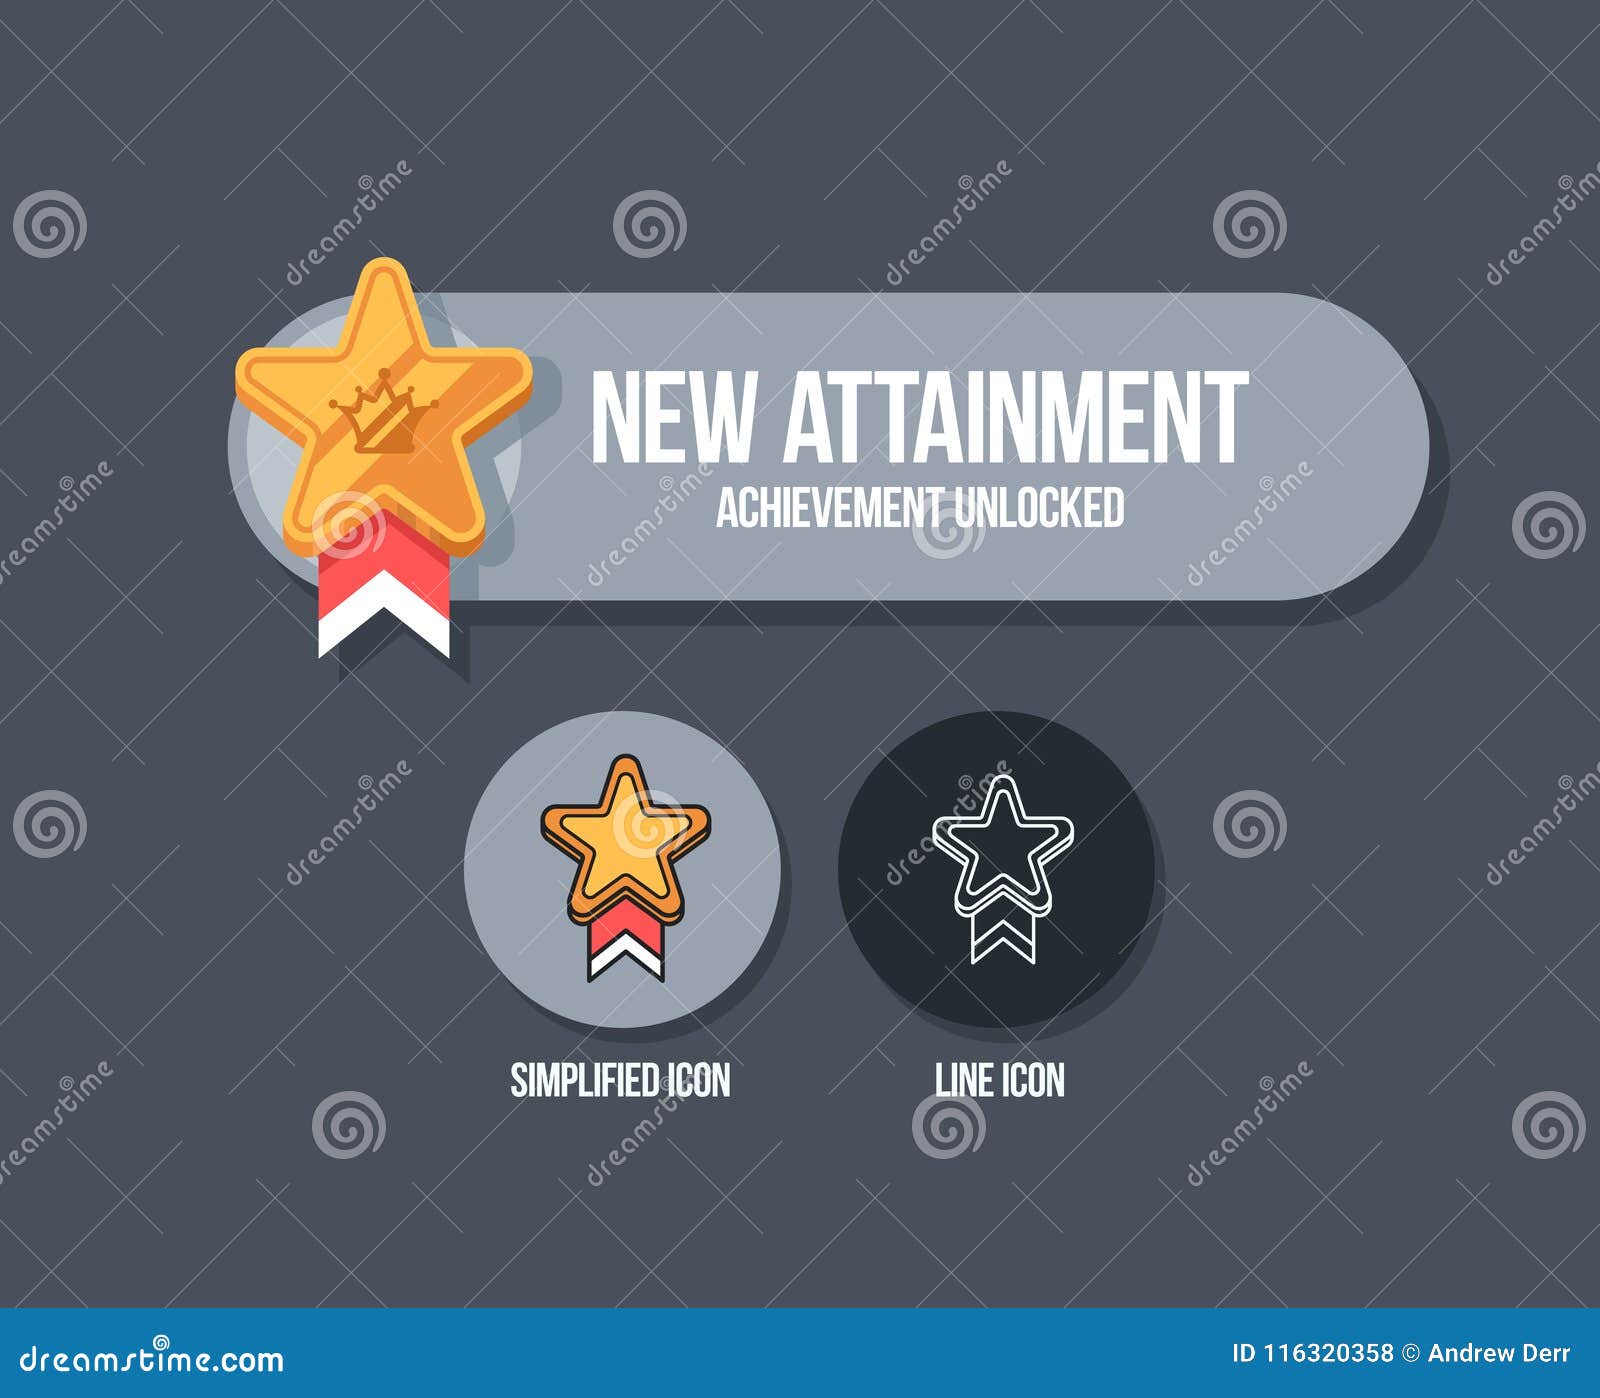 achievement panel . attainment banner concept with winner medal. reward icon in cartoon style.